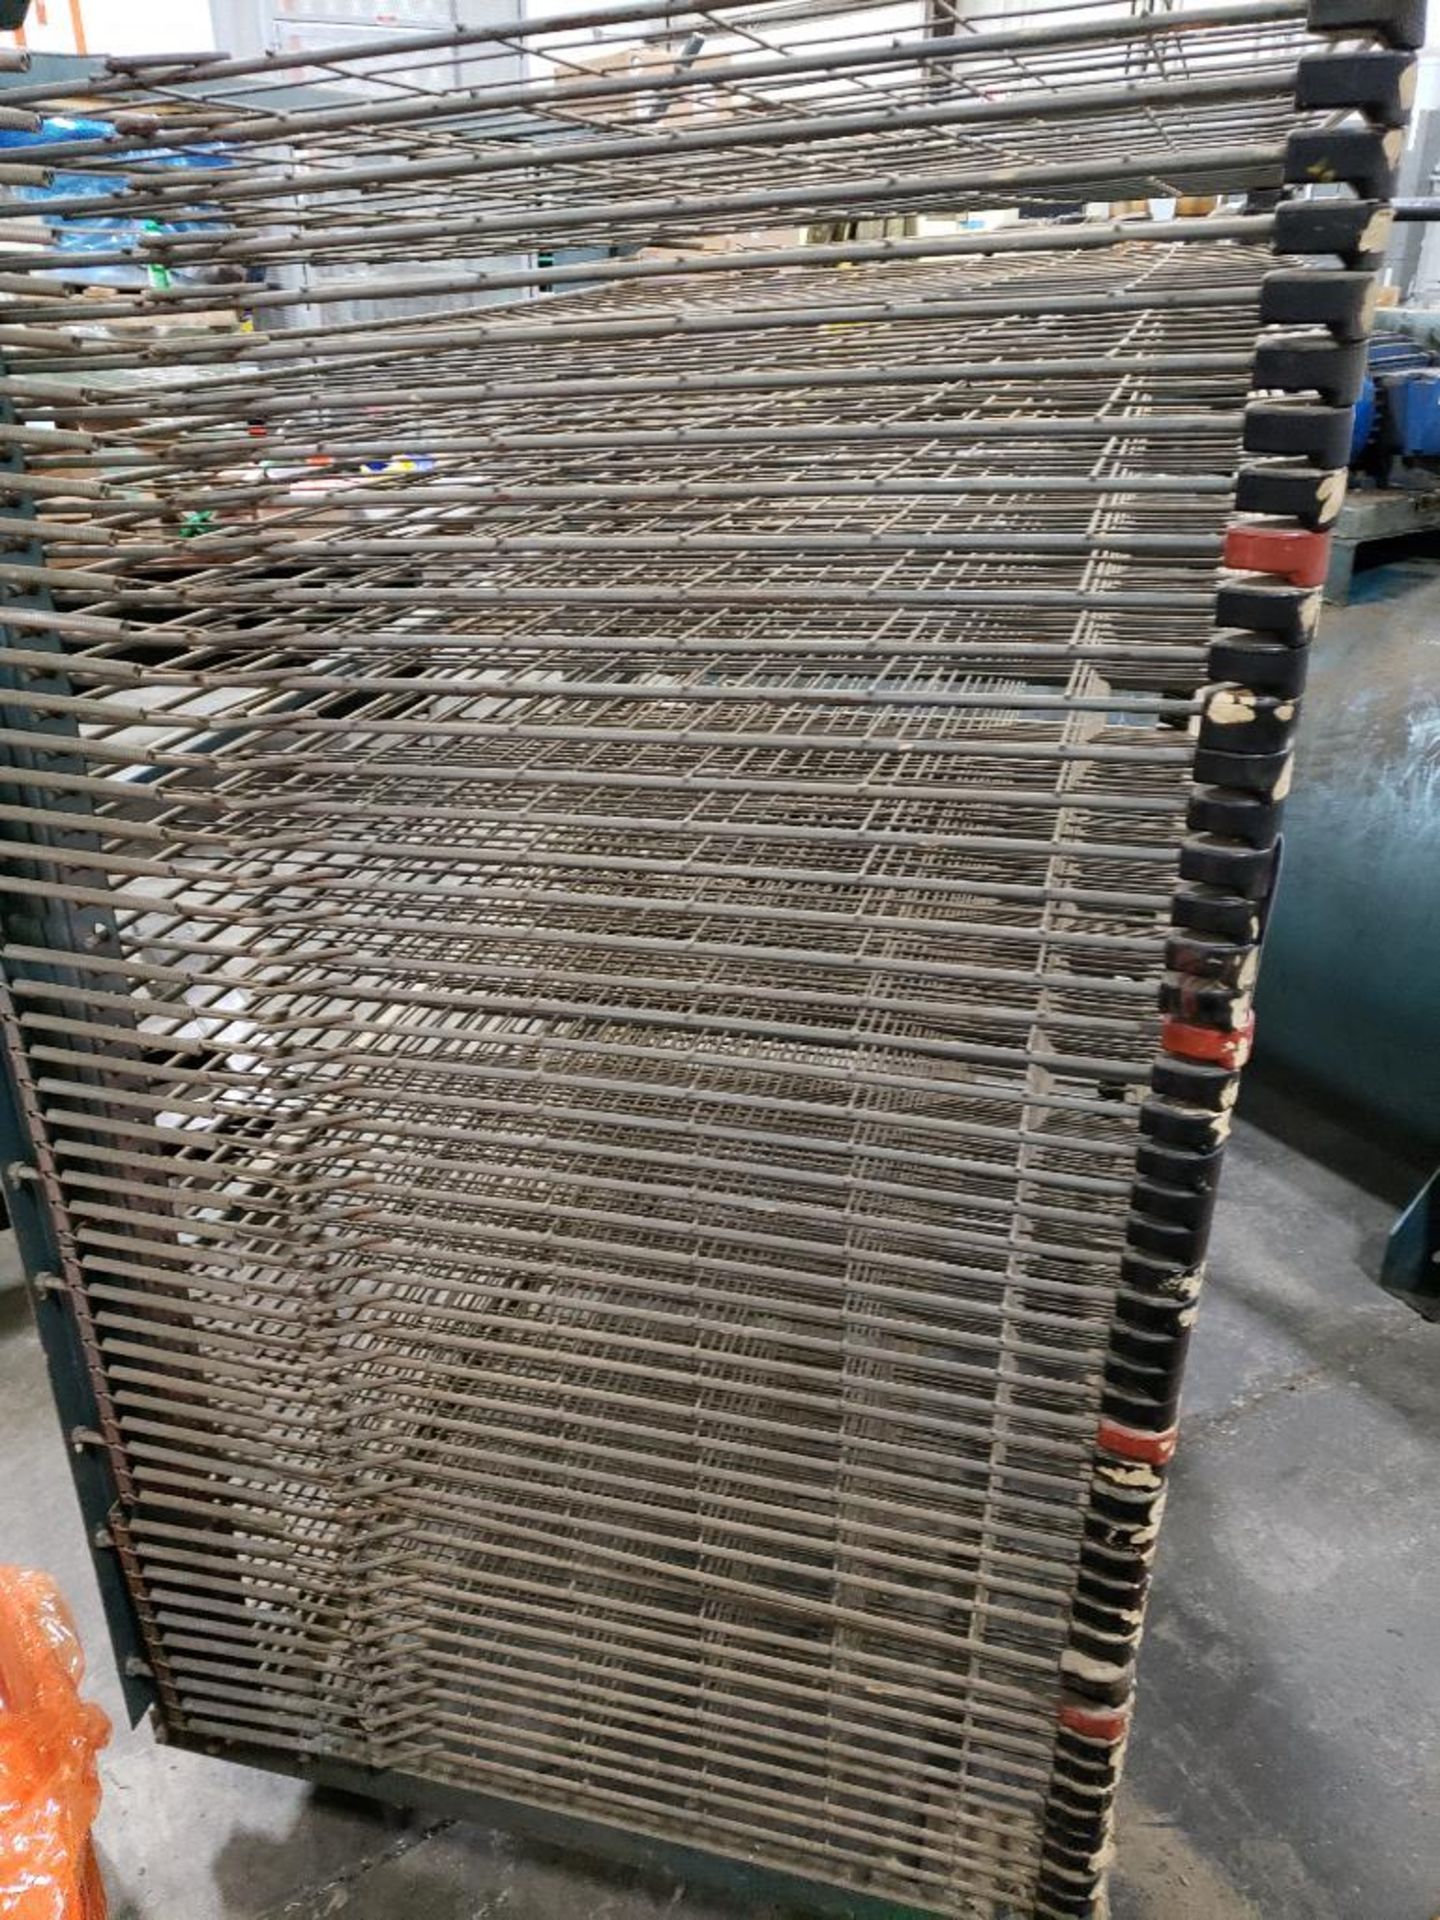 Drying rack. - Image 2 of 6